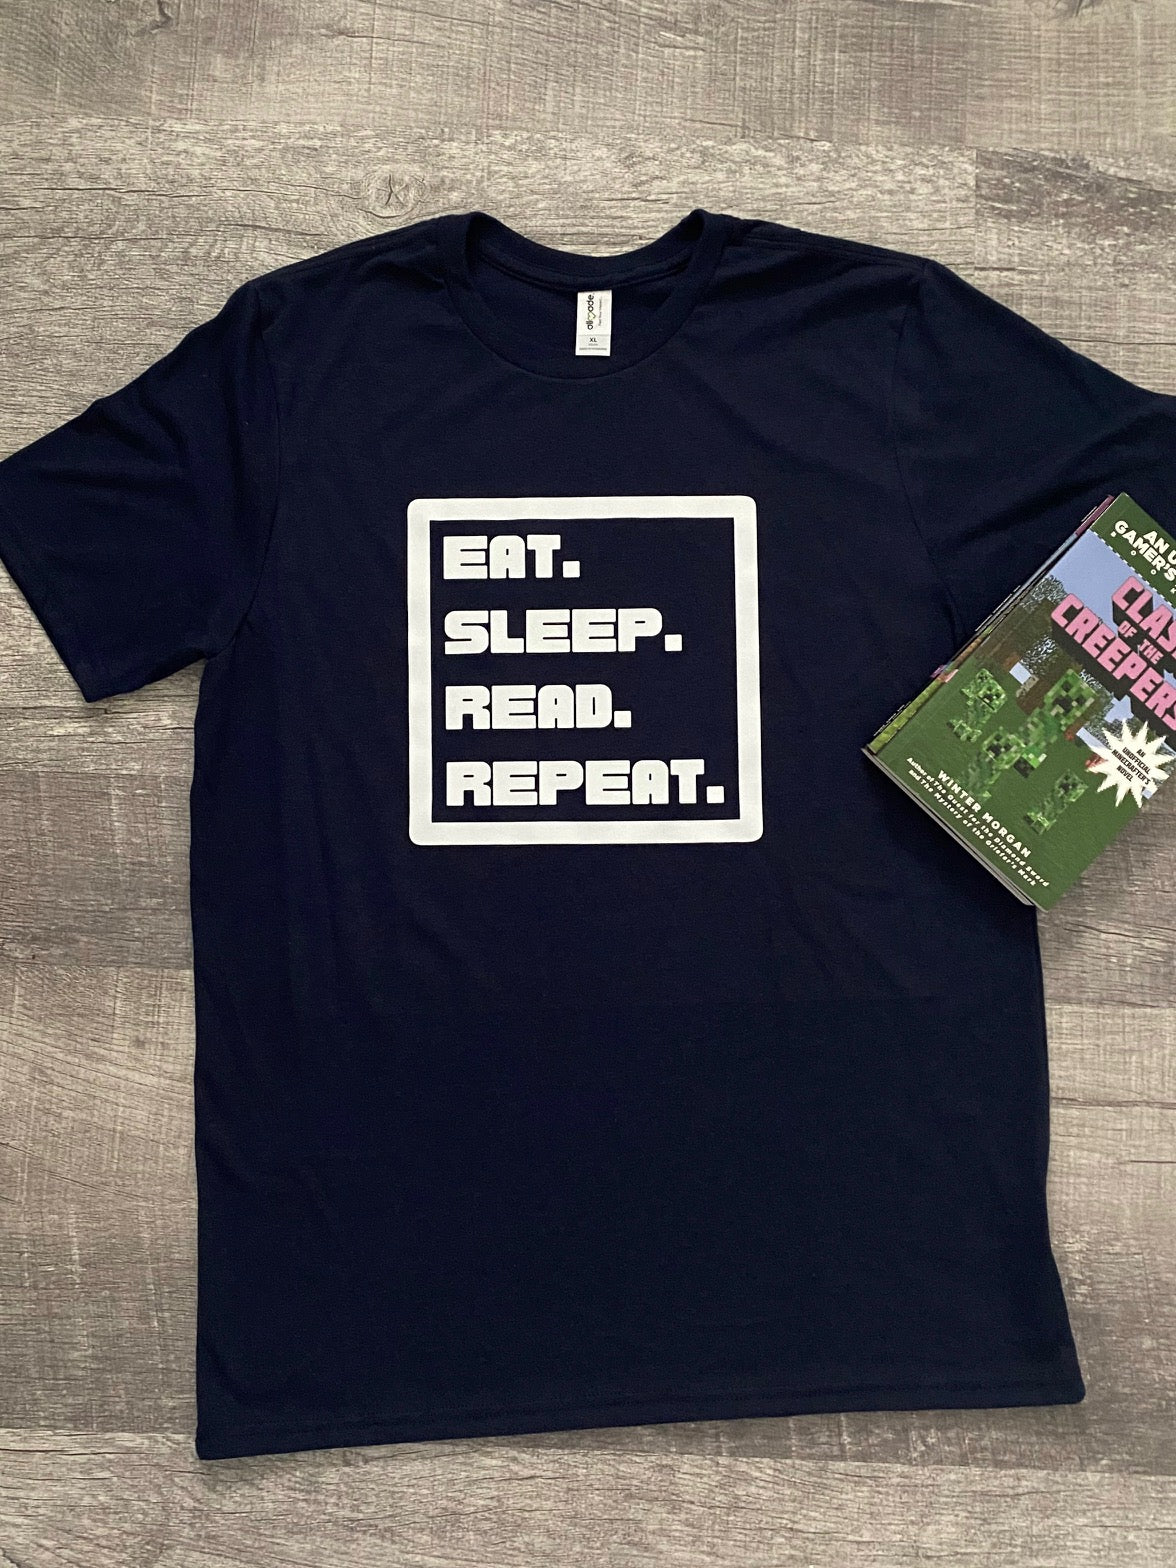 Eat. Sleep. Read. Repeat. Kids Eco-Friendly T-Shirt